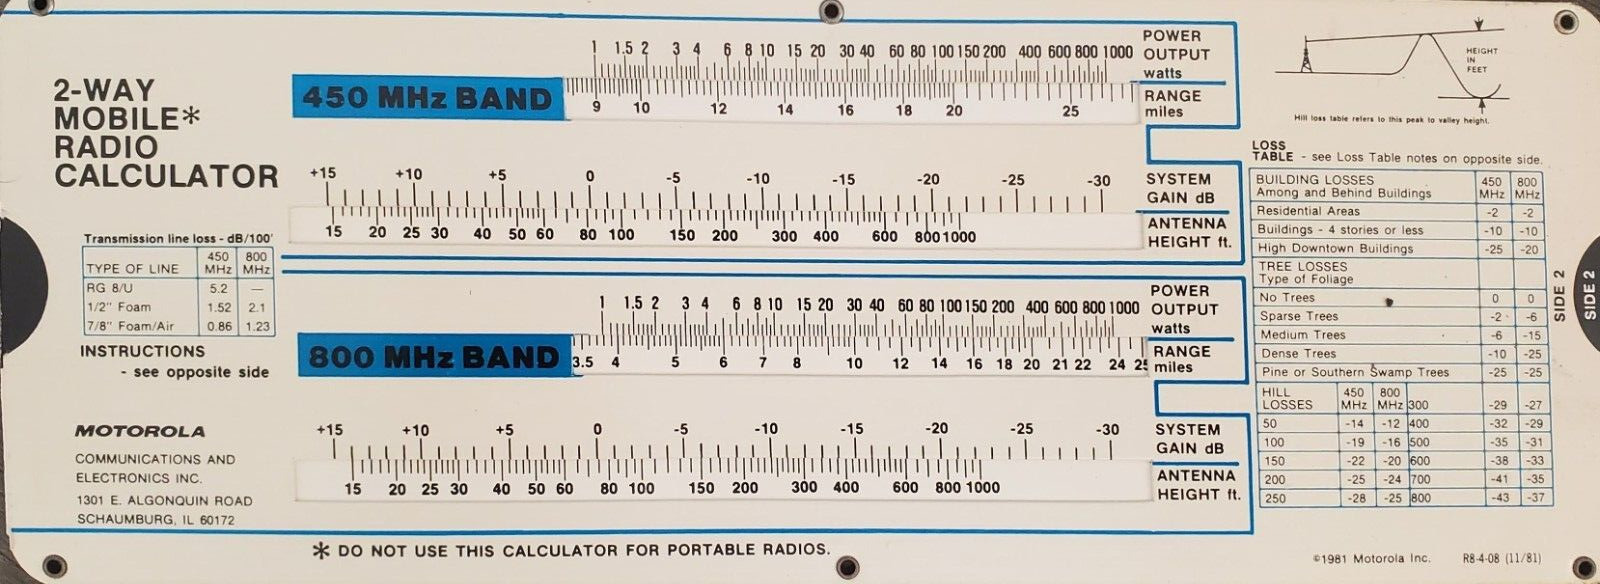 Motorola 2-Way Mobile Radio Calculator Slide Ruler Calculations Vintage 1981 